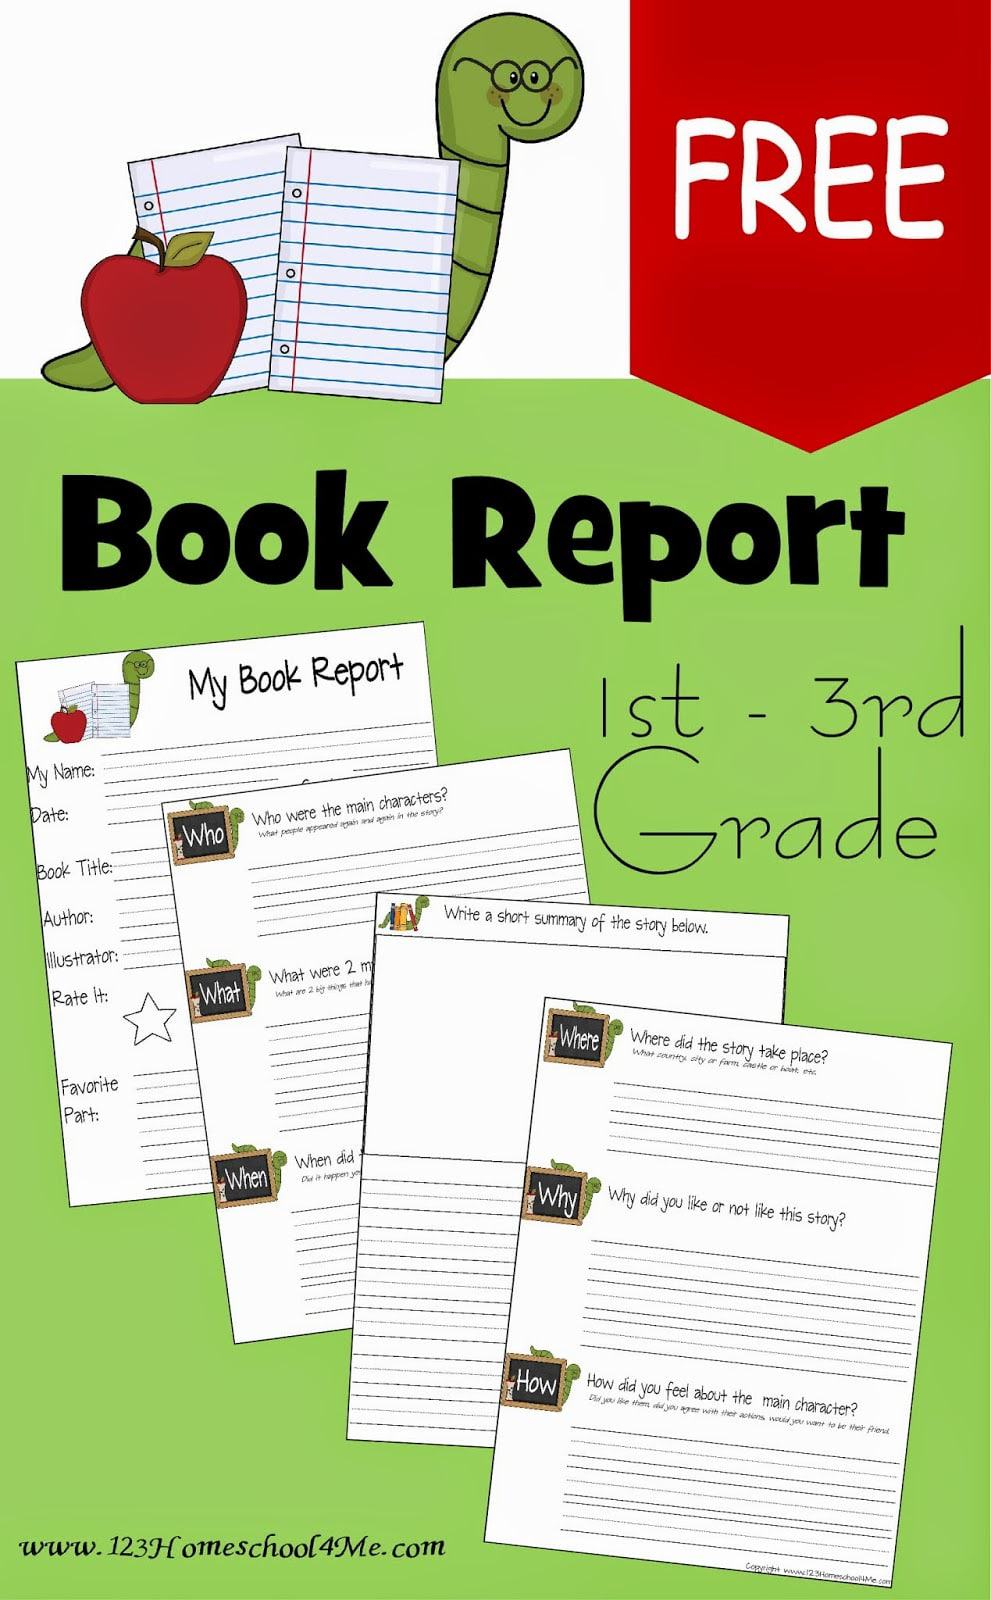 FREE 10st 10rd Grade Book Report Template In Book Report Template 3Rd Grade